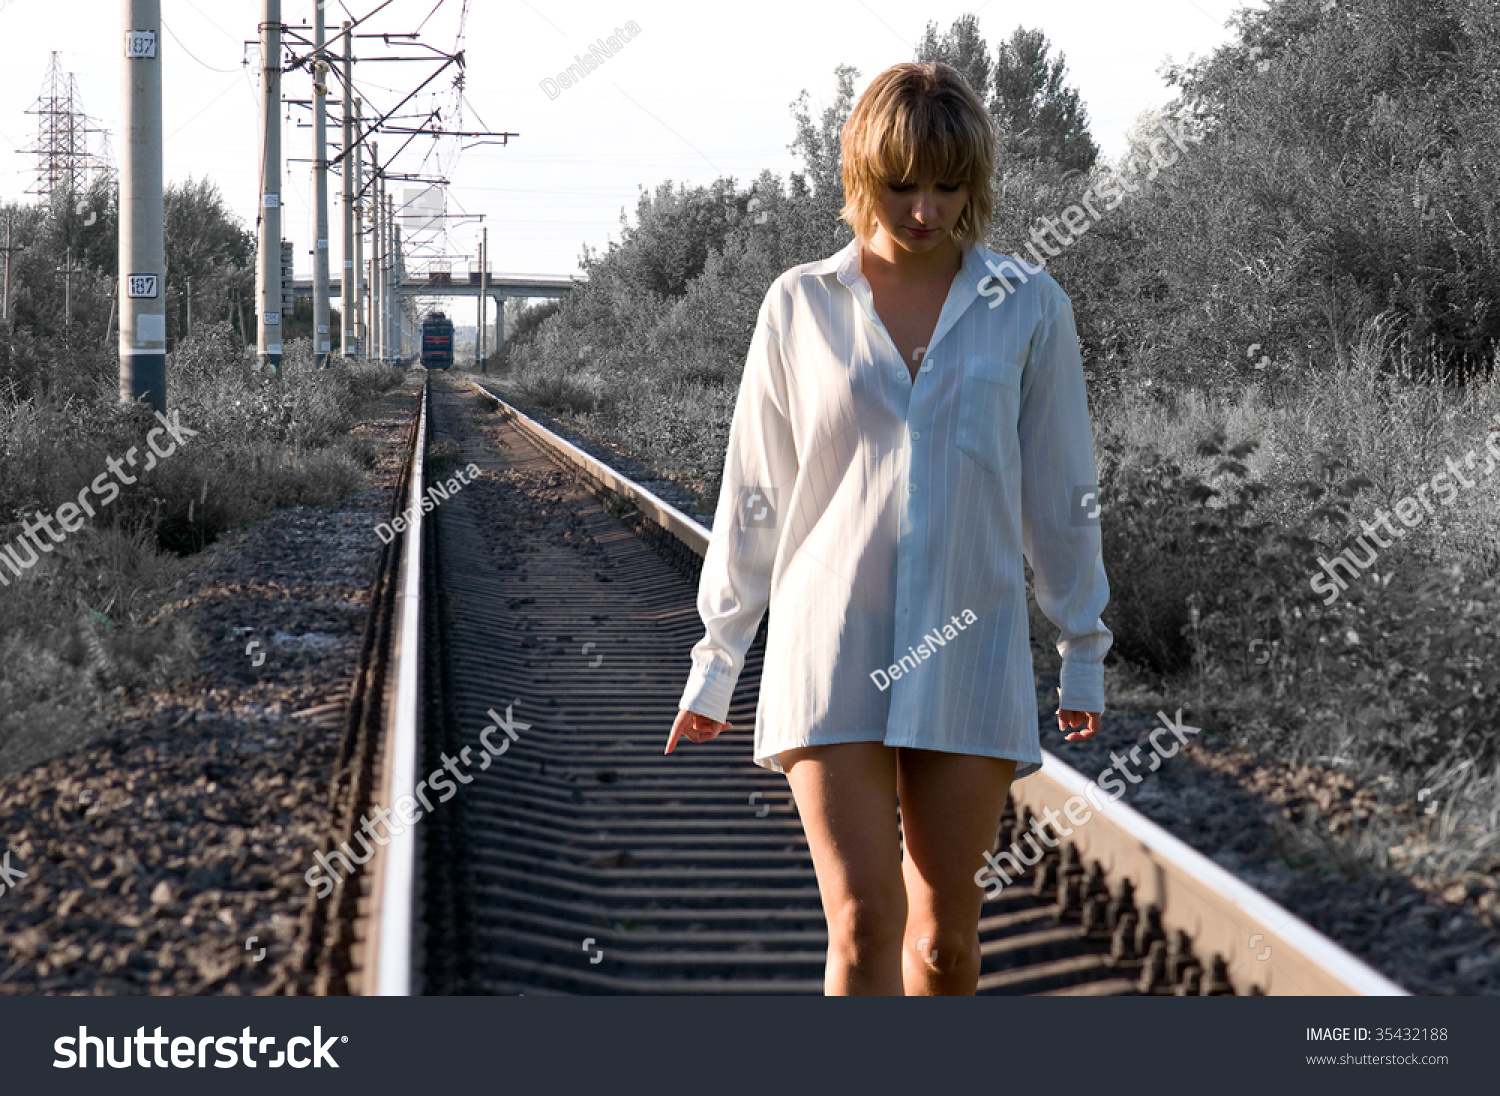 Young Beautiful Woman Walking On A Railroad Track Stock Photo 35432188 ...